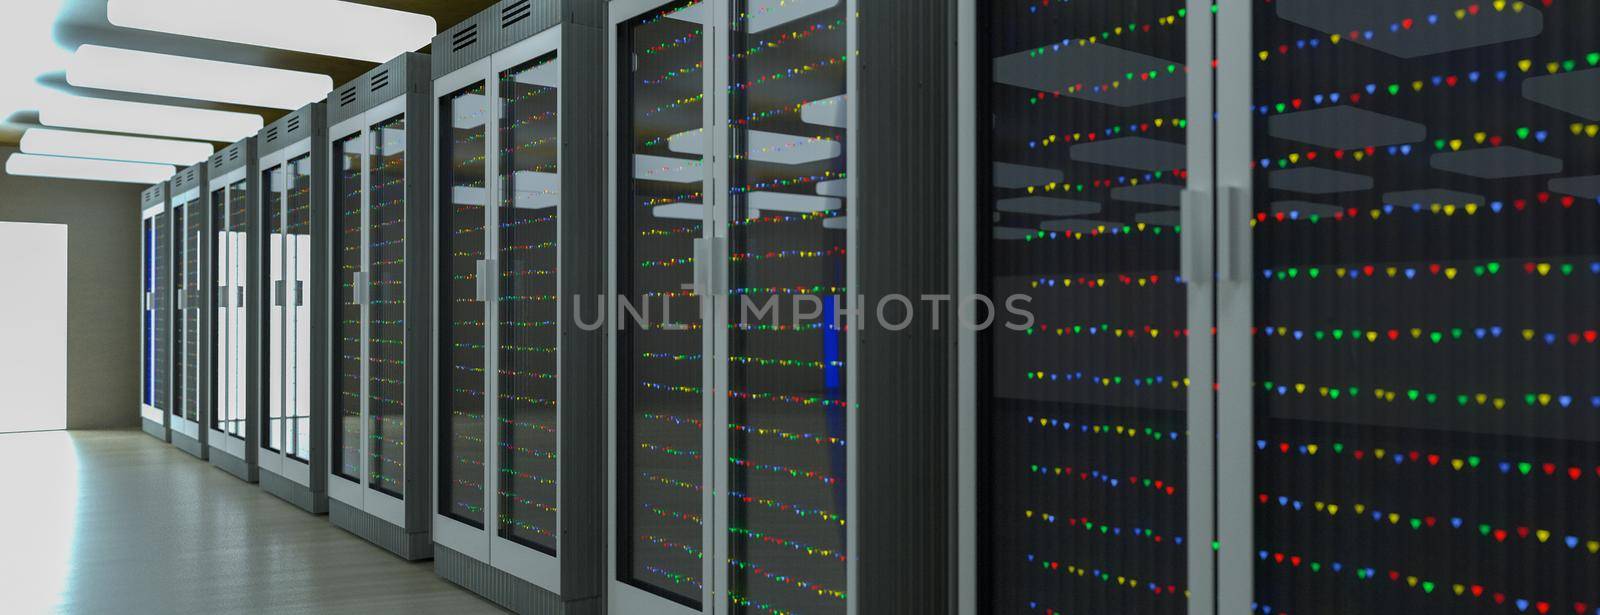 Servers. Servers room data center. Backup, mining, hosting, mainframe, farm and computer rack with storage information. 3d render by kwarkot